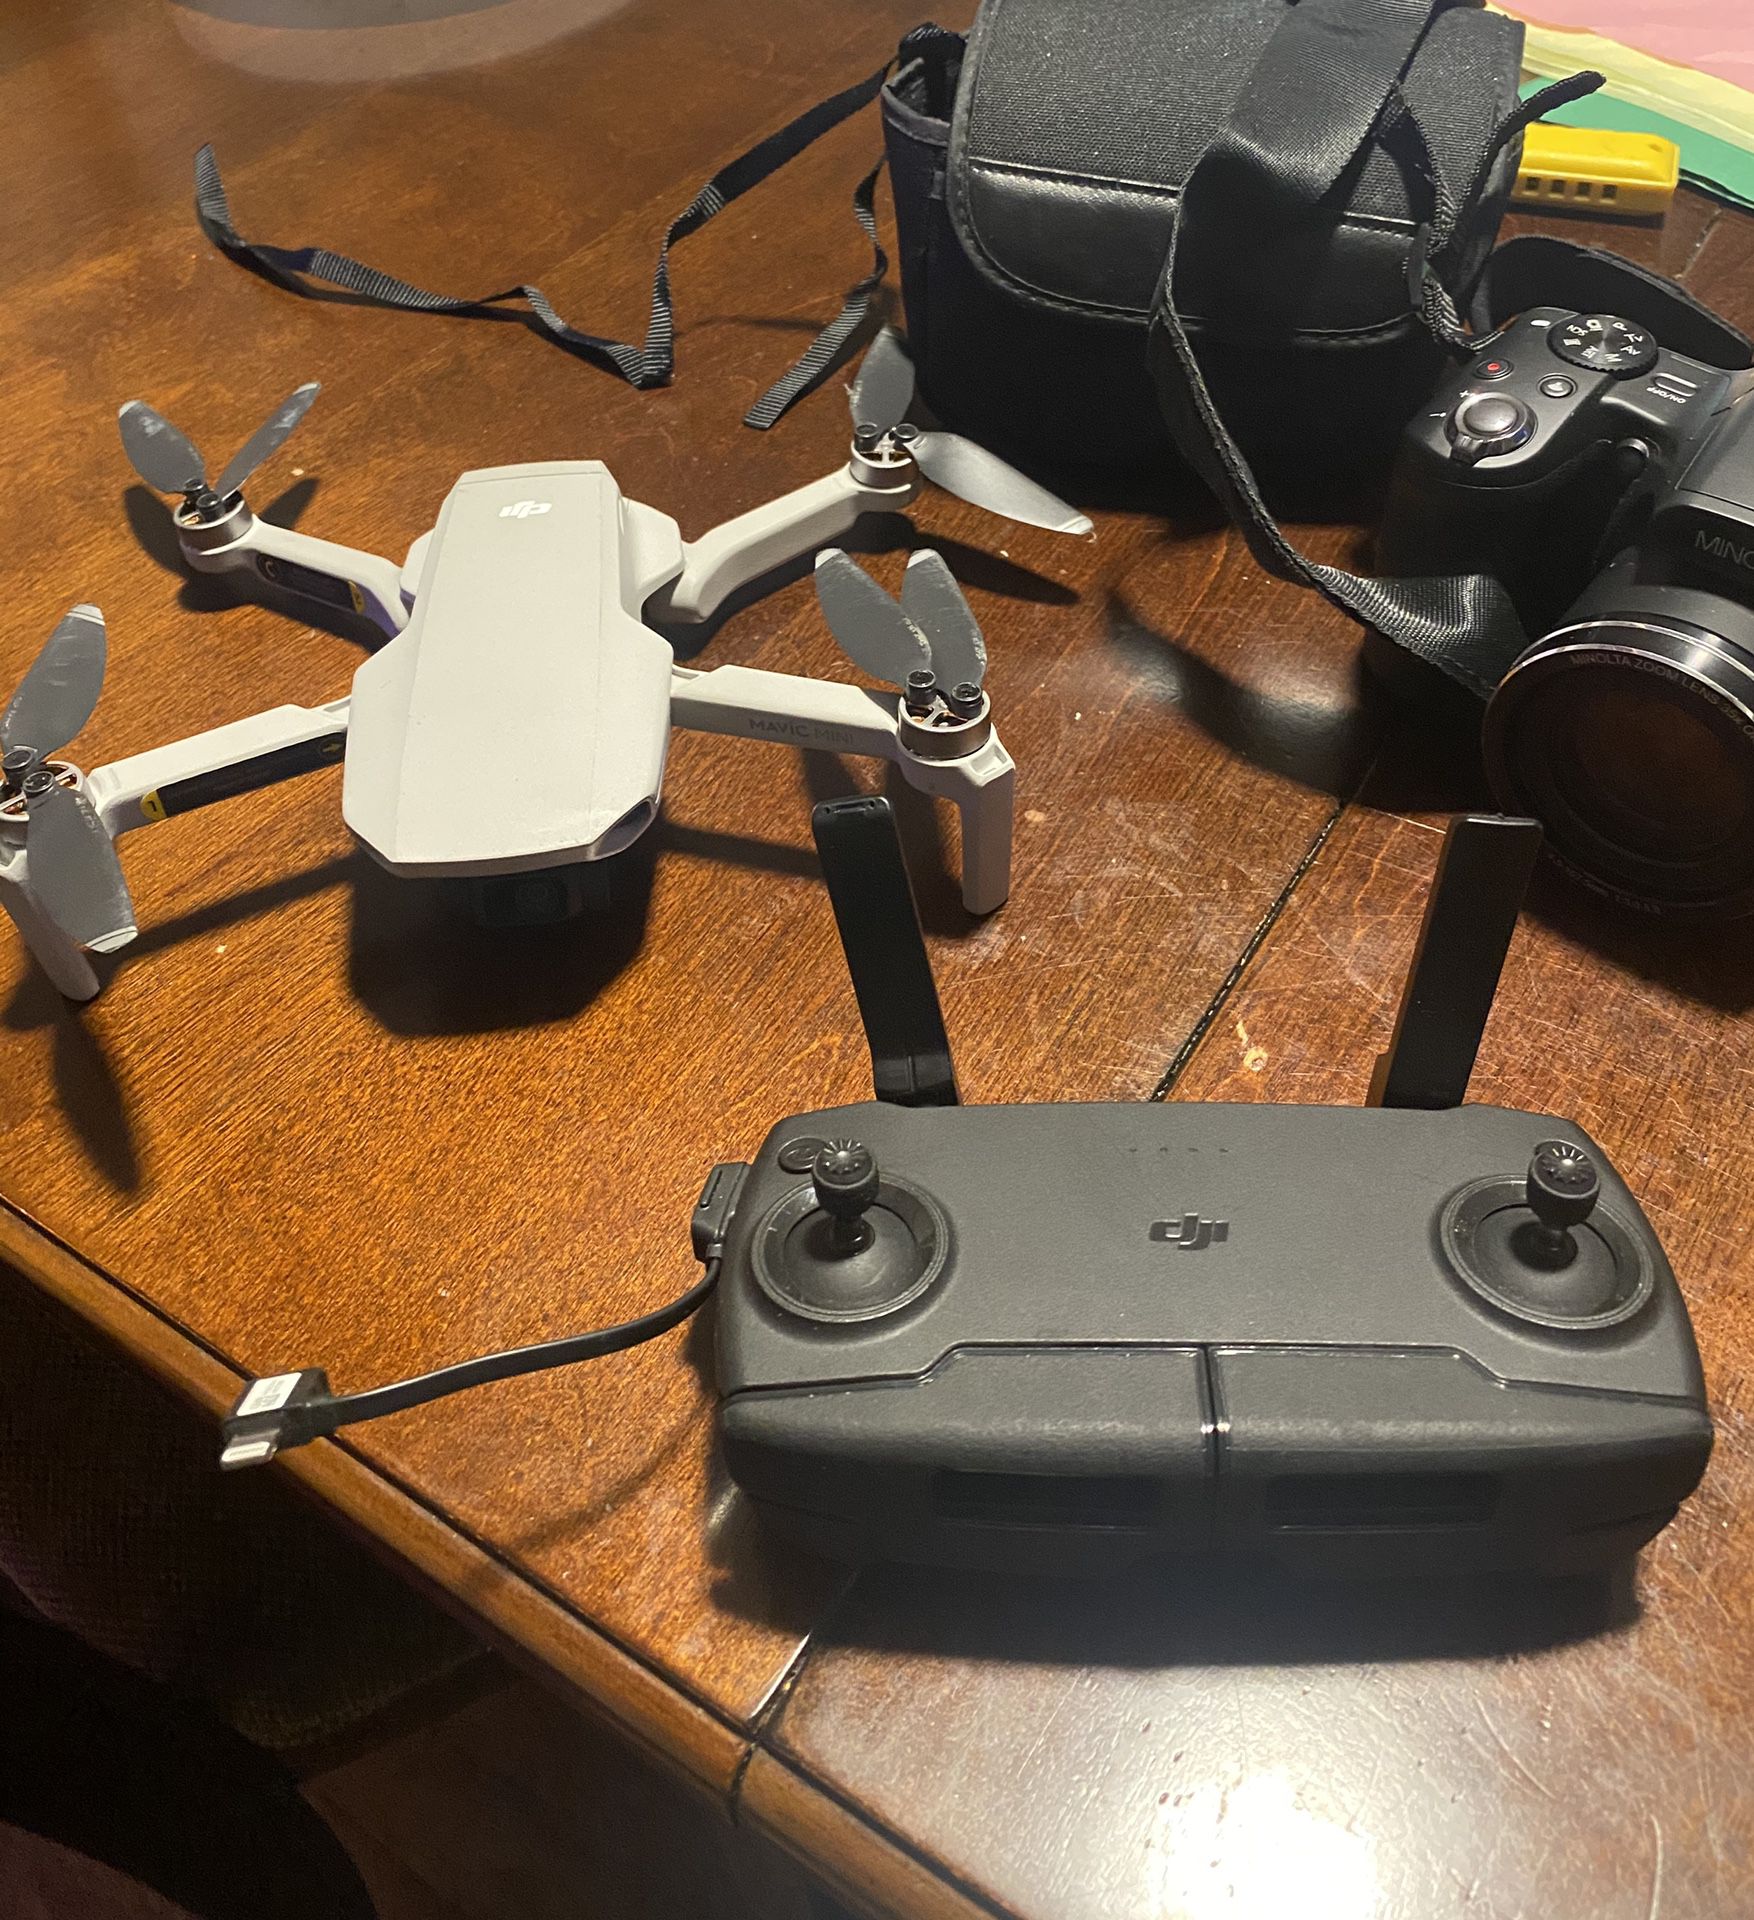 DJI Mavic Mini drone and camera